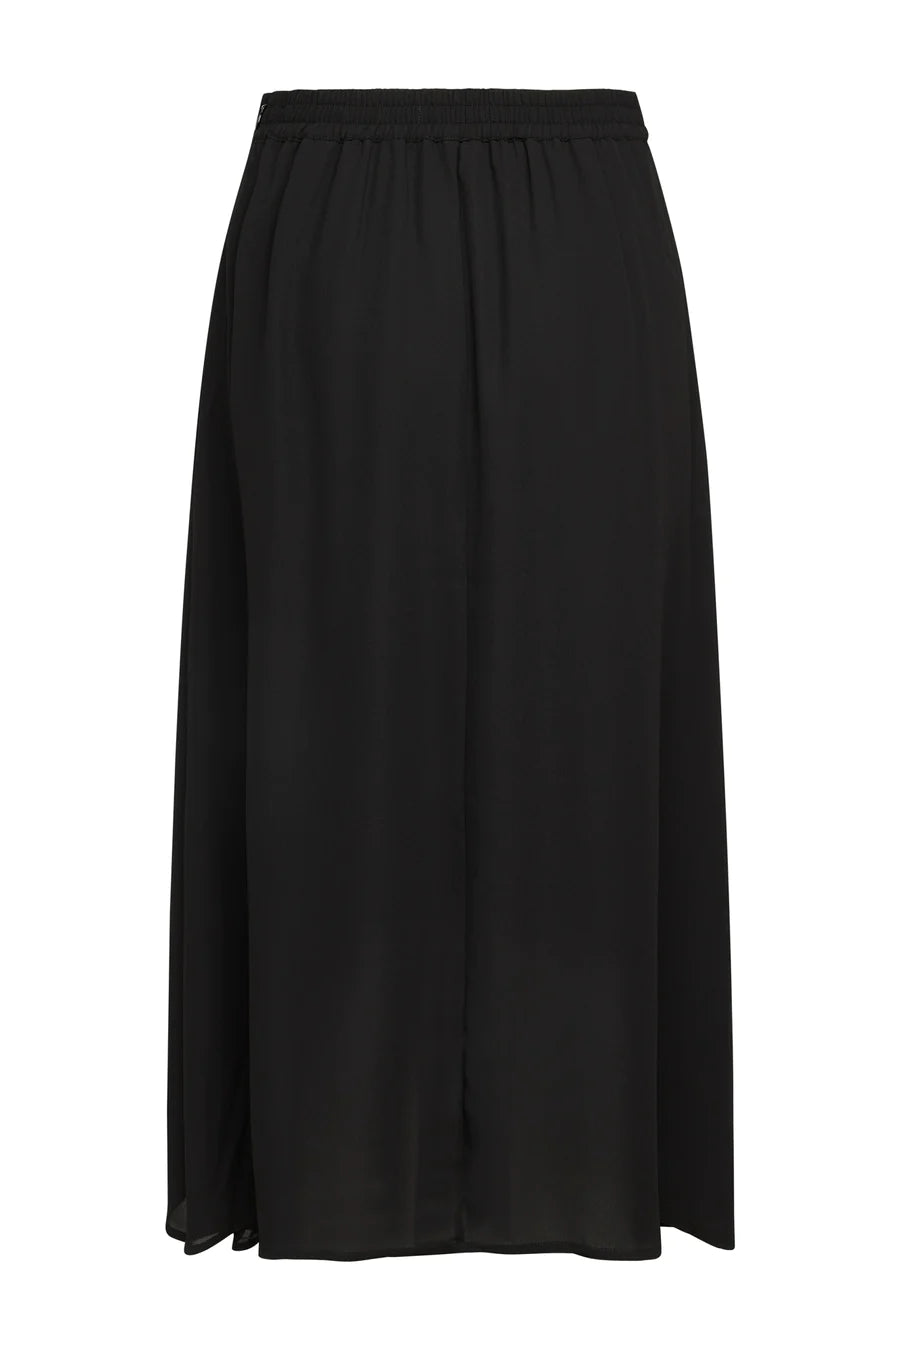 CamillaBBAras skirt - Black